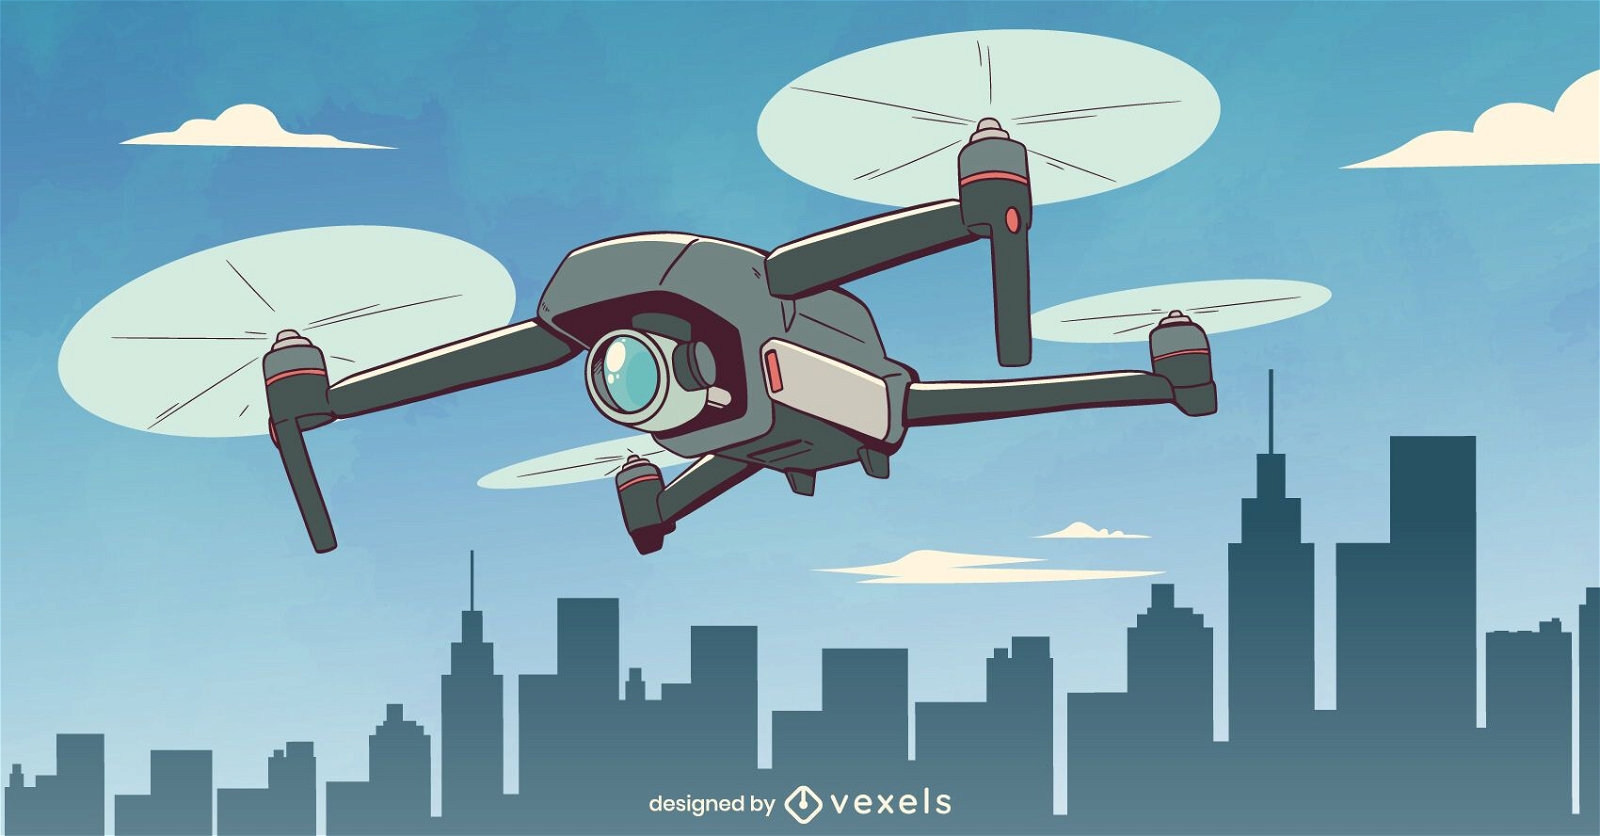 Surveillance drone illustration design